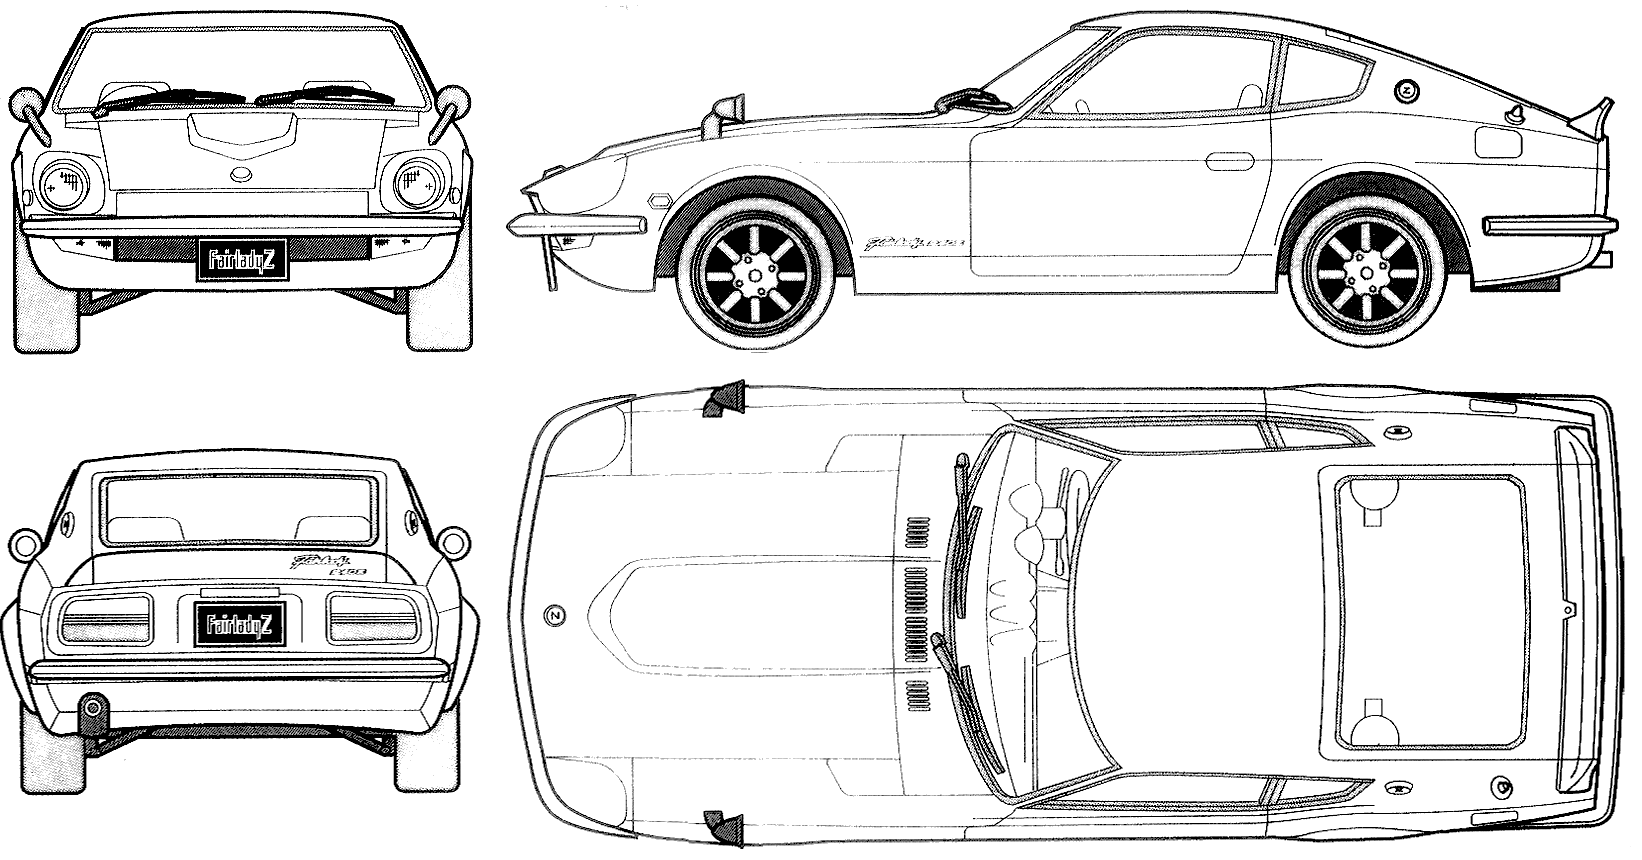 Datsun 240Z blueprint